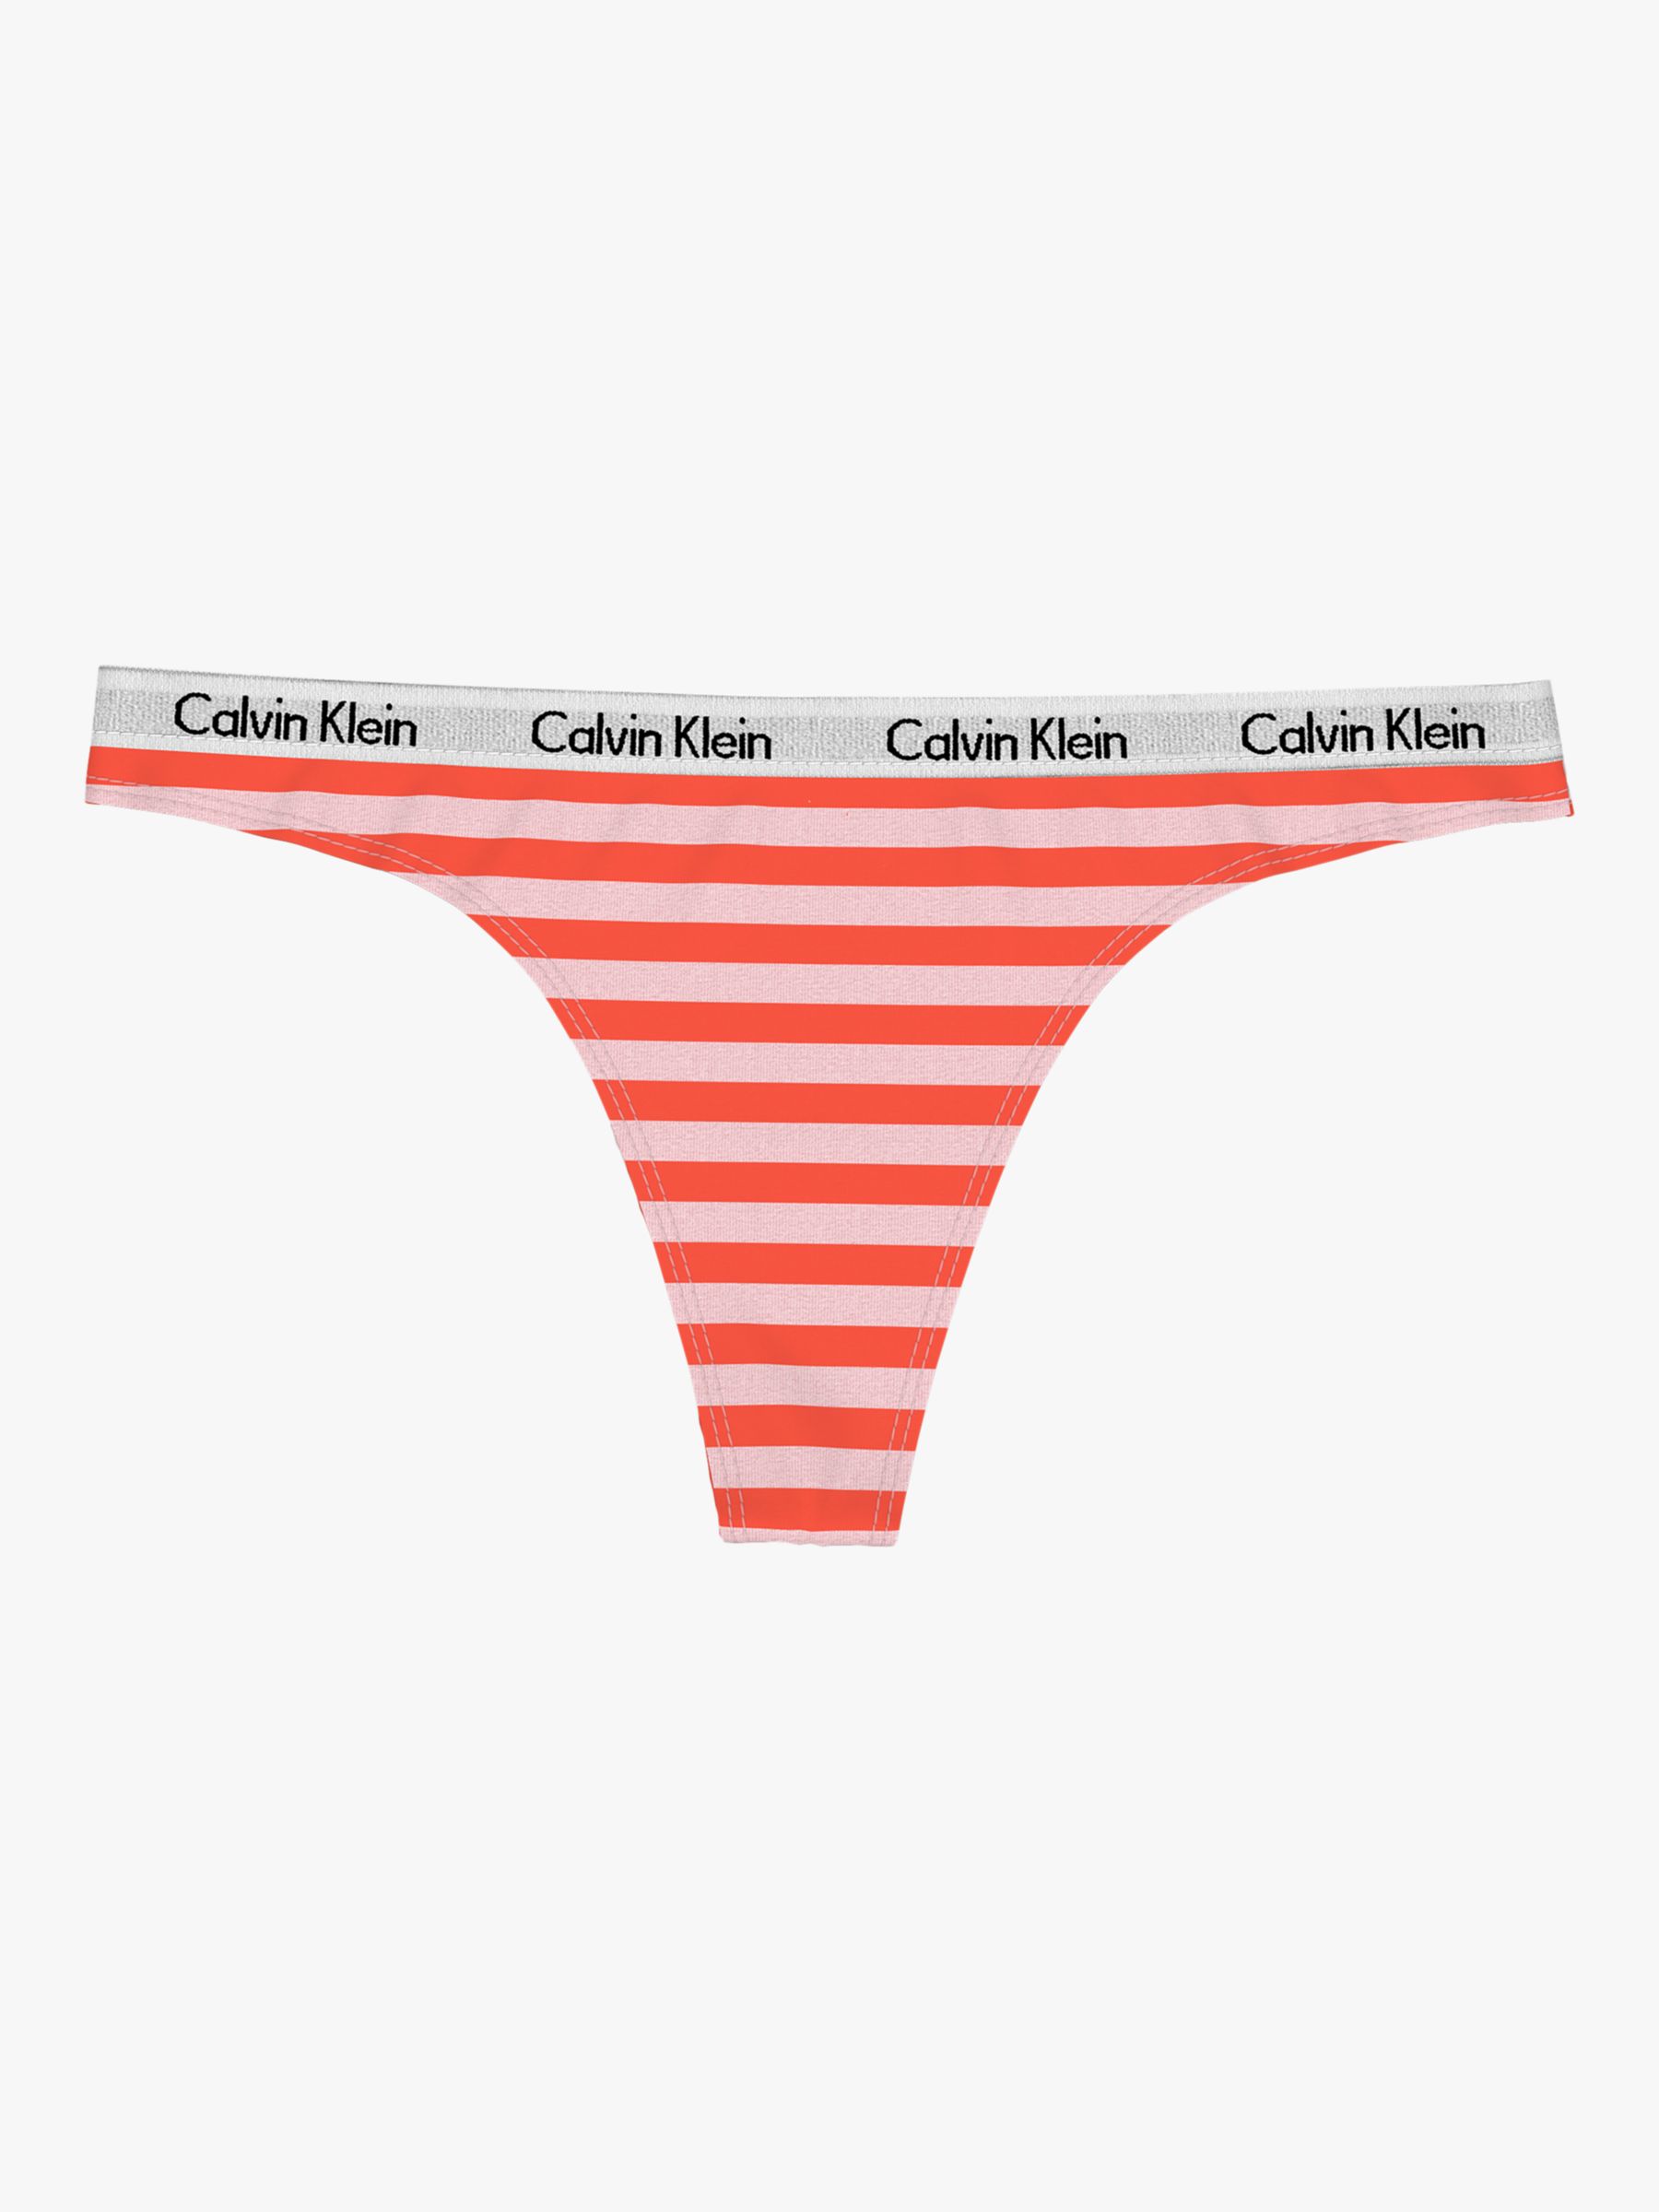 Calvin Klein Carousel Thong, Rainer Stripe Pink Shell